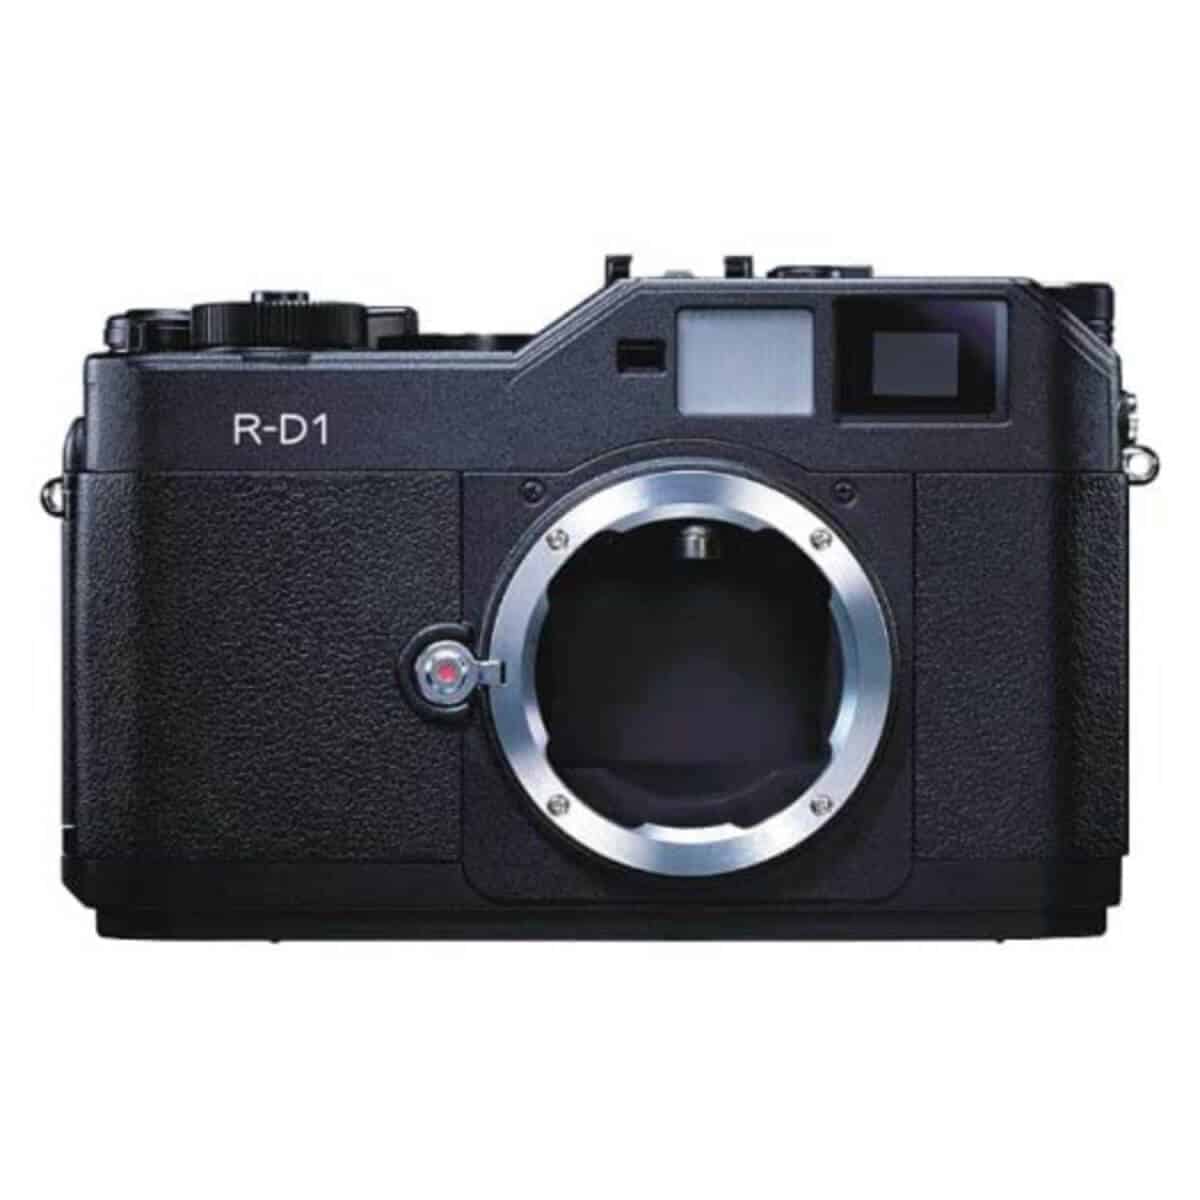 Epson R-D1 digital rangefinder camera.